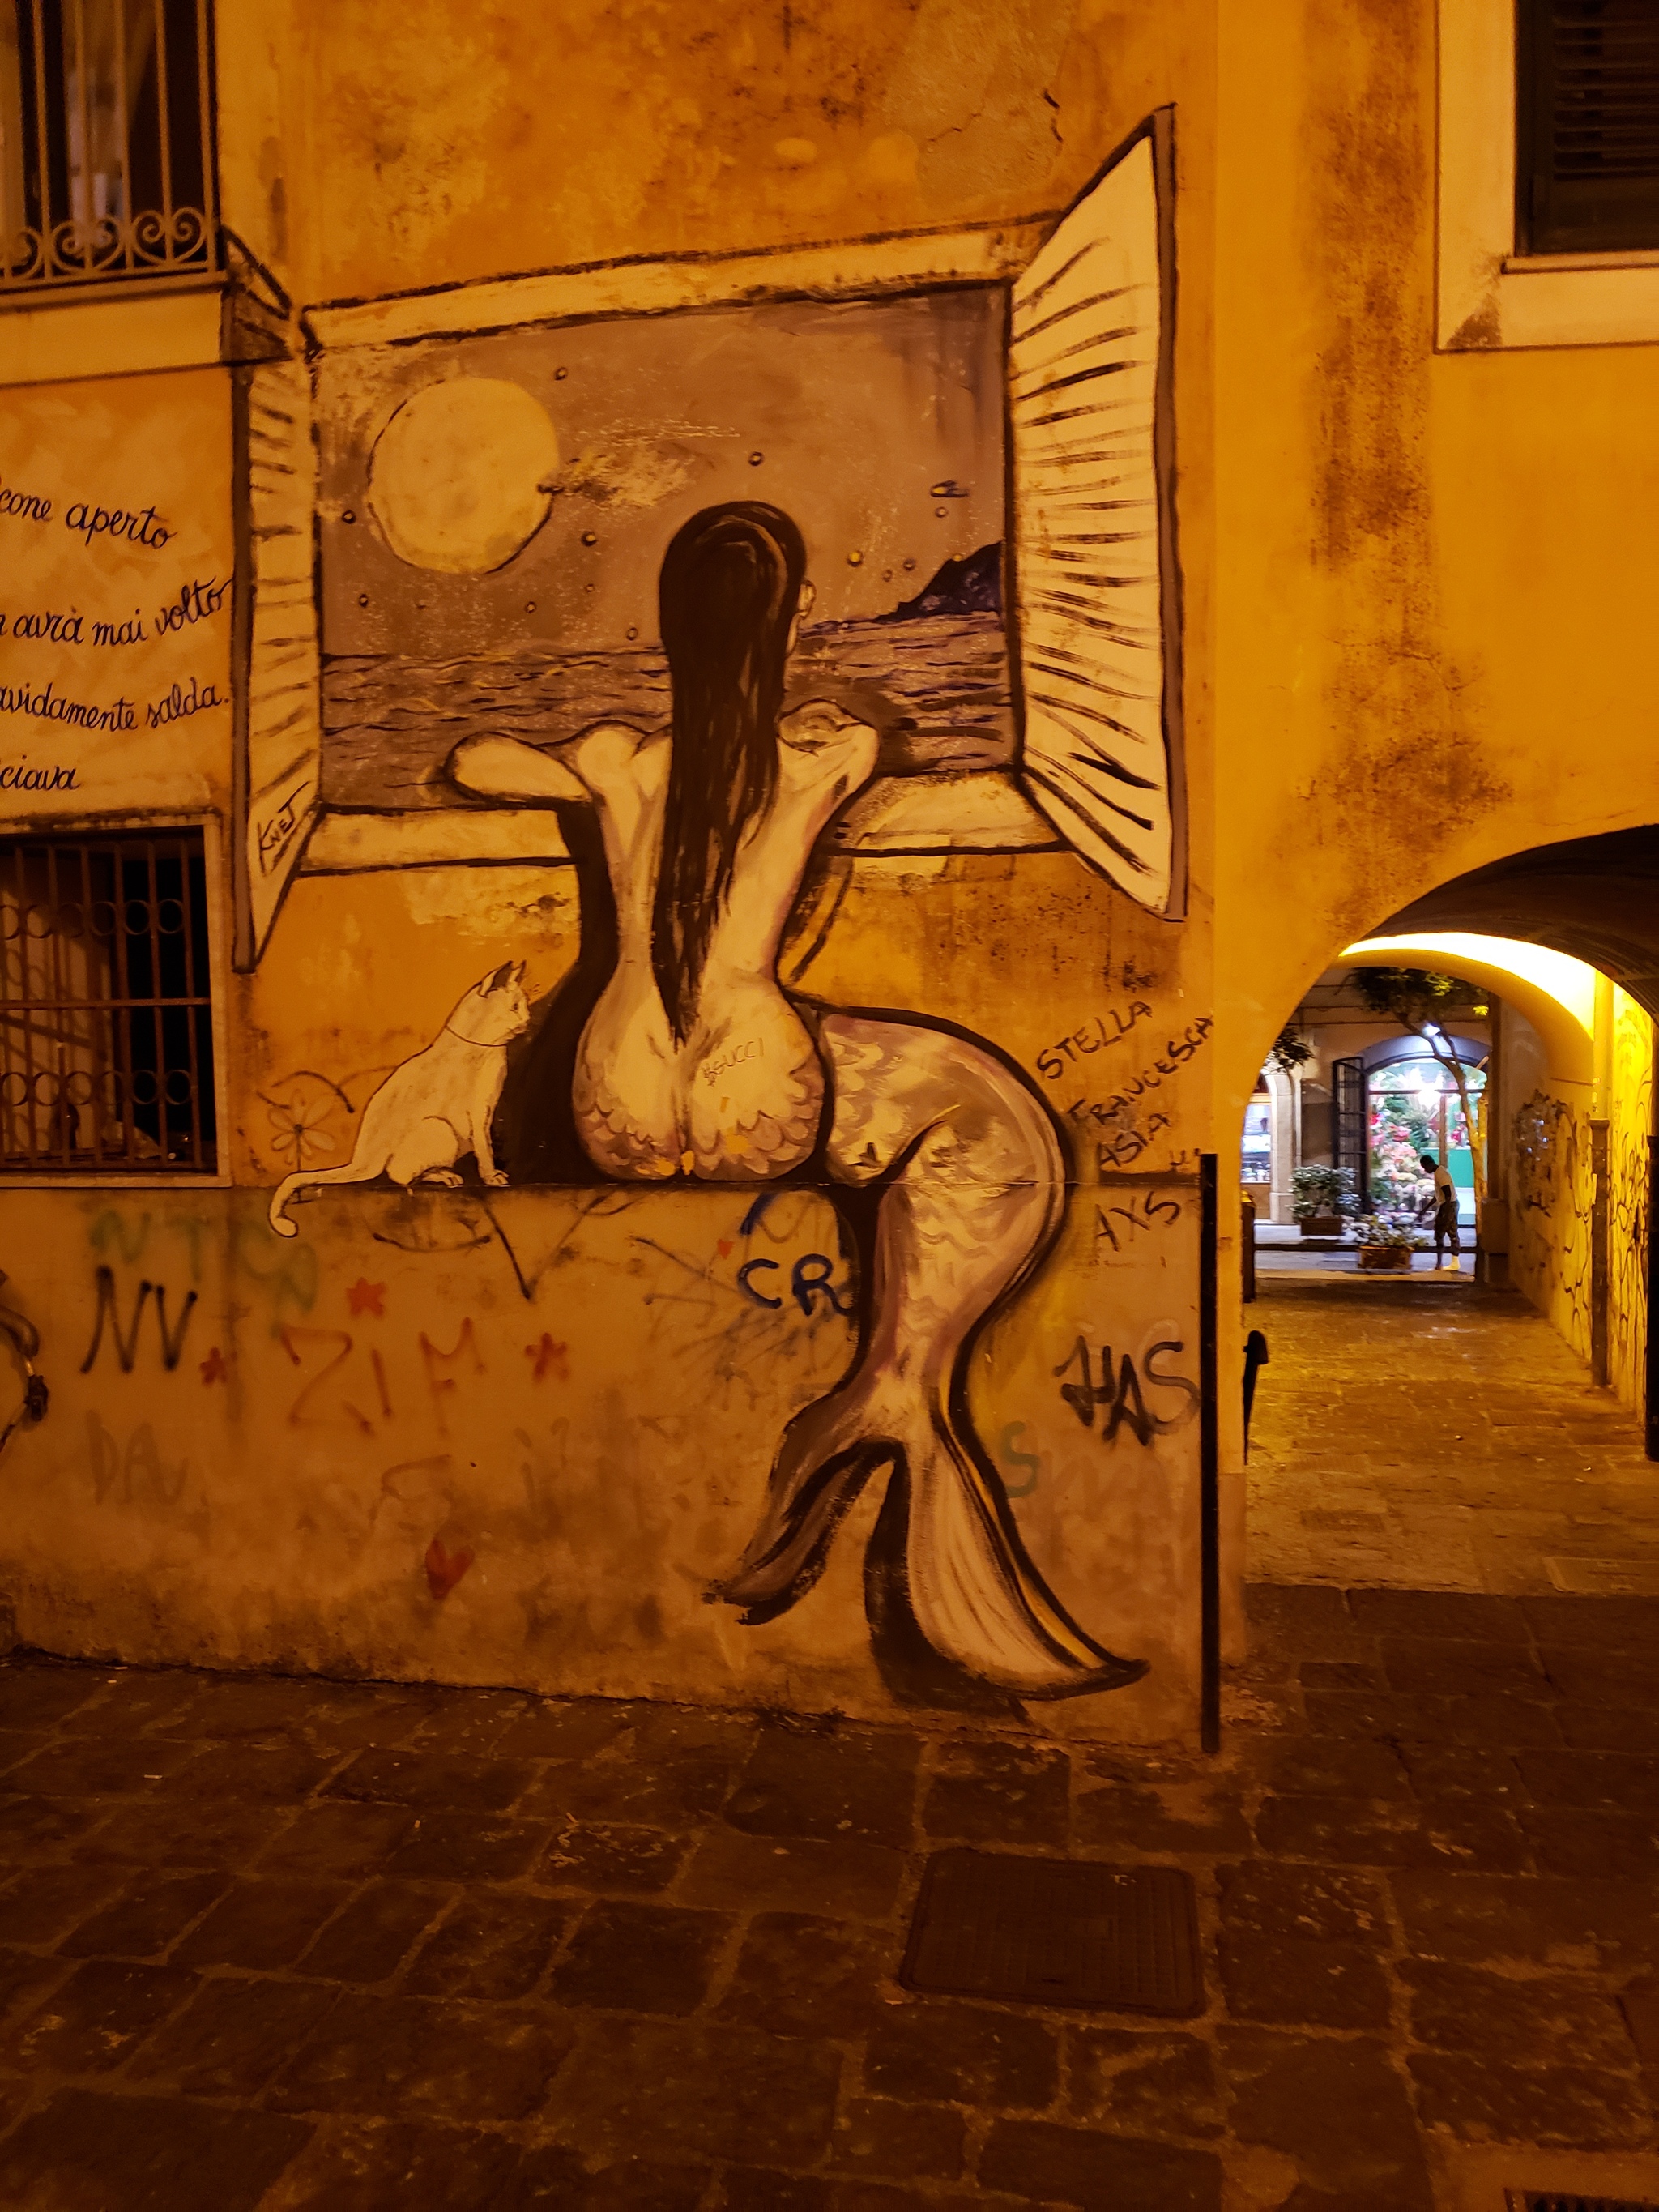 Graffiti, Salerno - My, Italy, Graffiti, Travels, Sailors, Mobile photography, Longpost